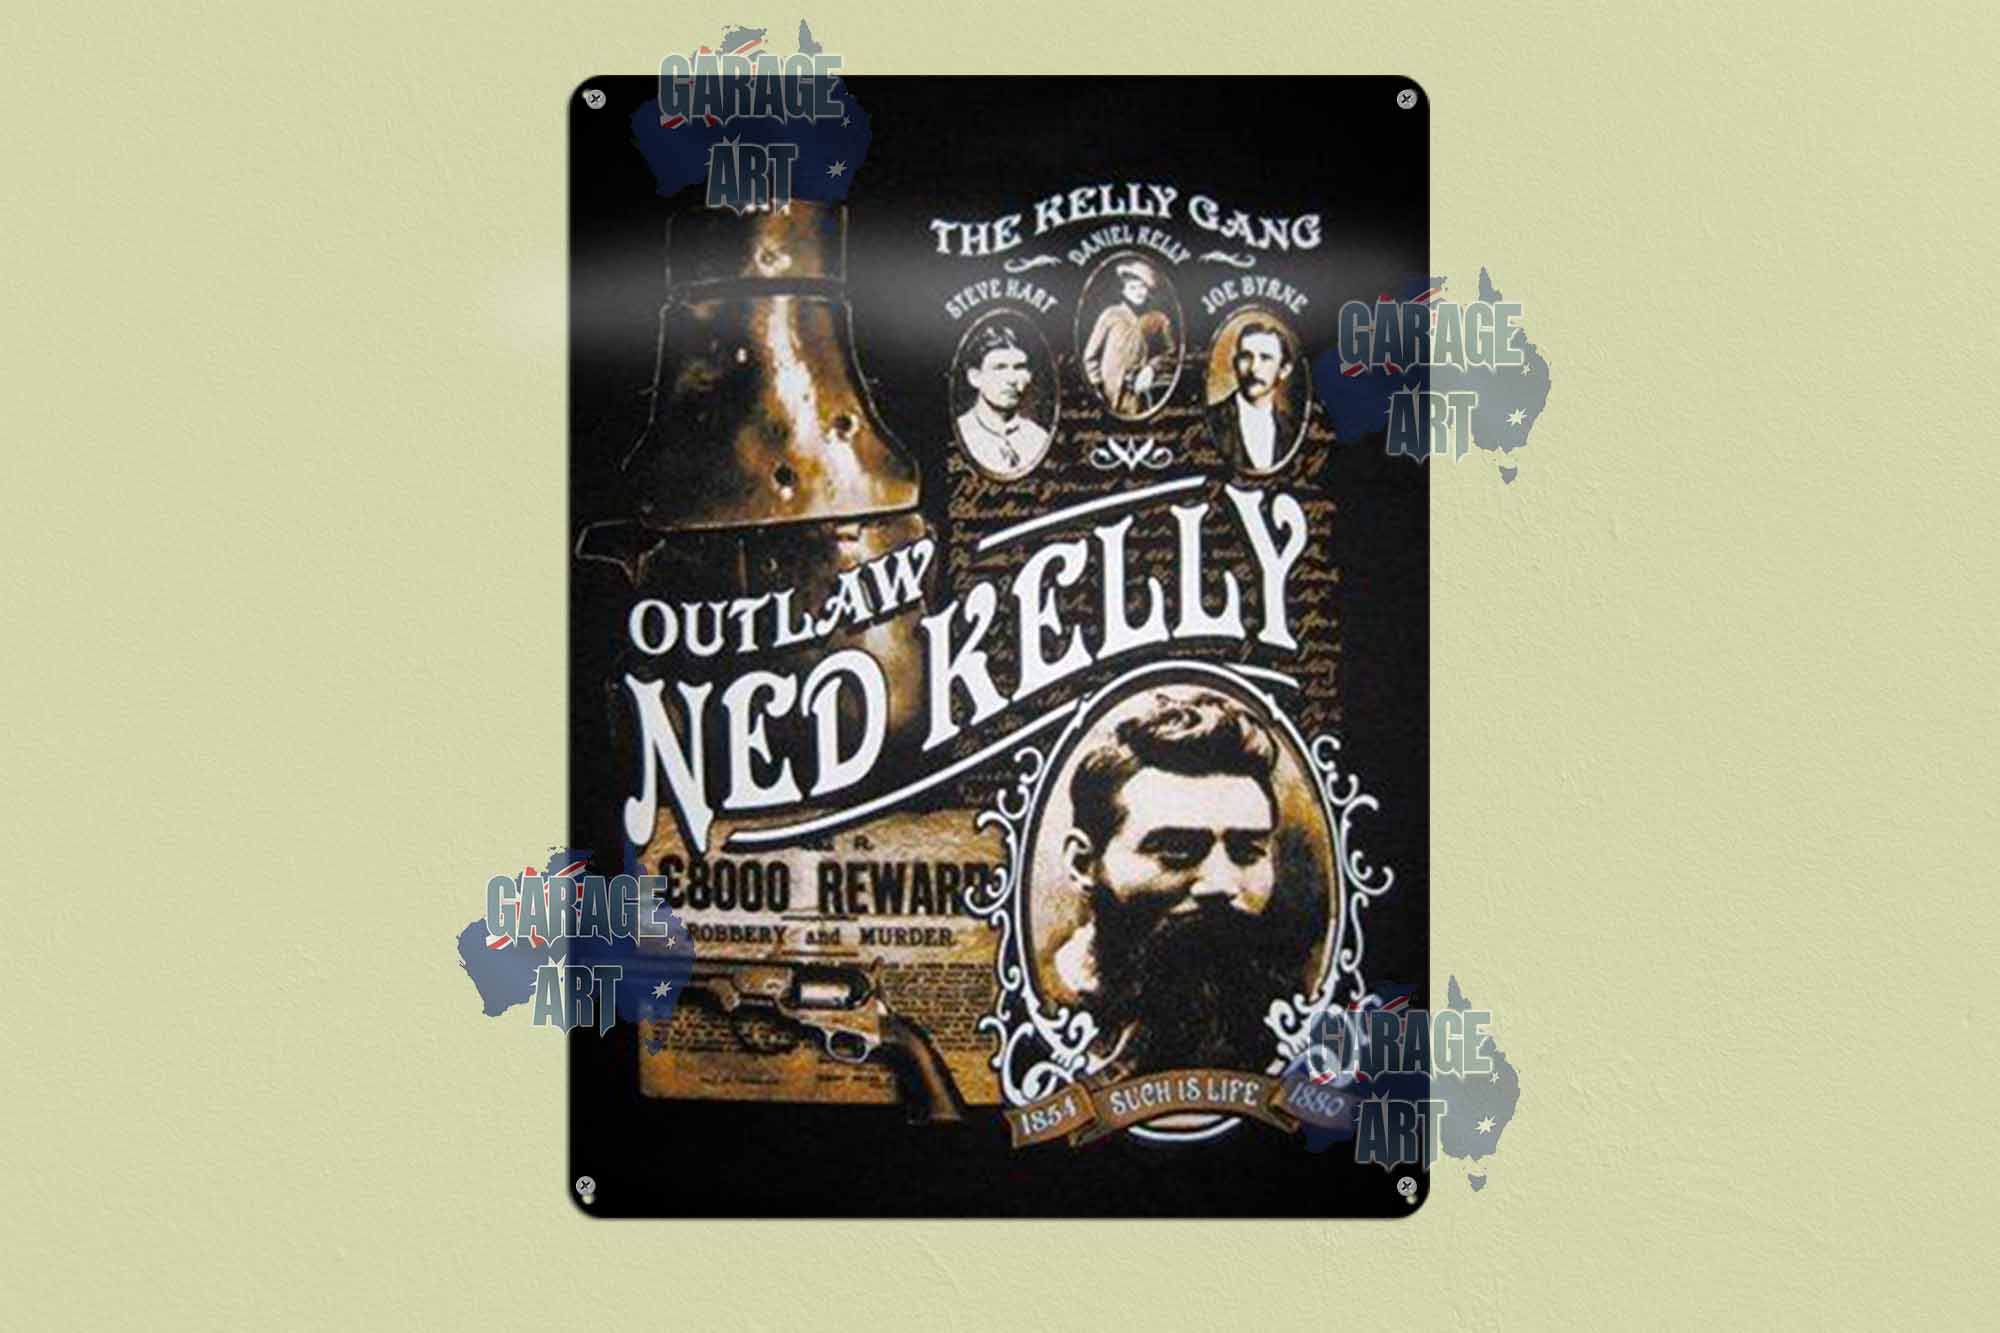 Outlaw Ned Kelly Tin Sign freeshipping - garageartaustralia